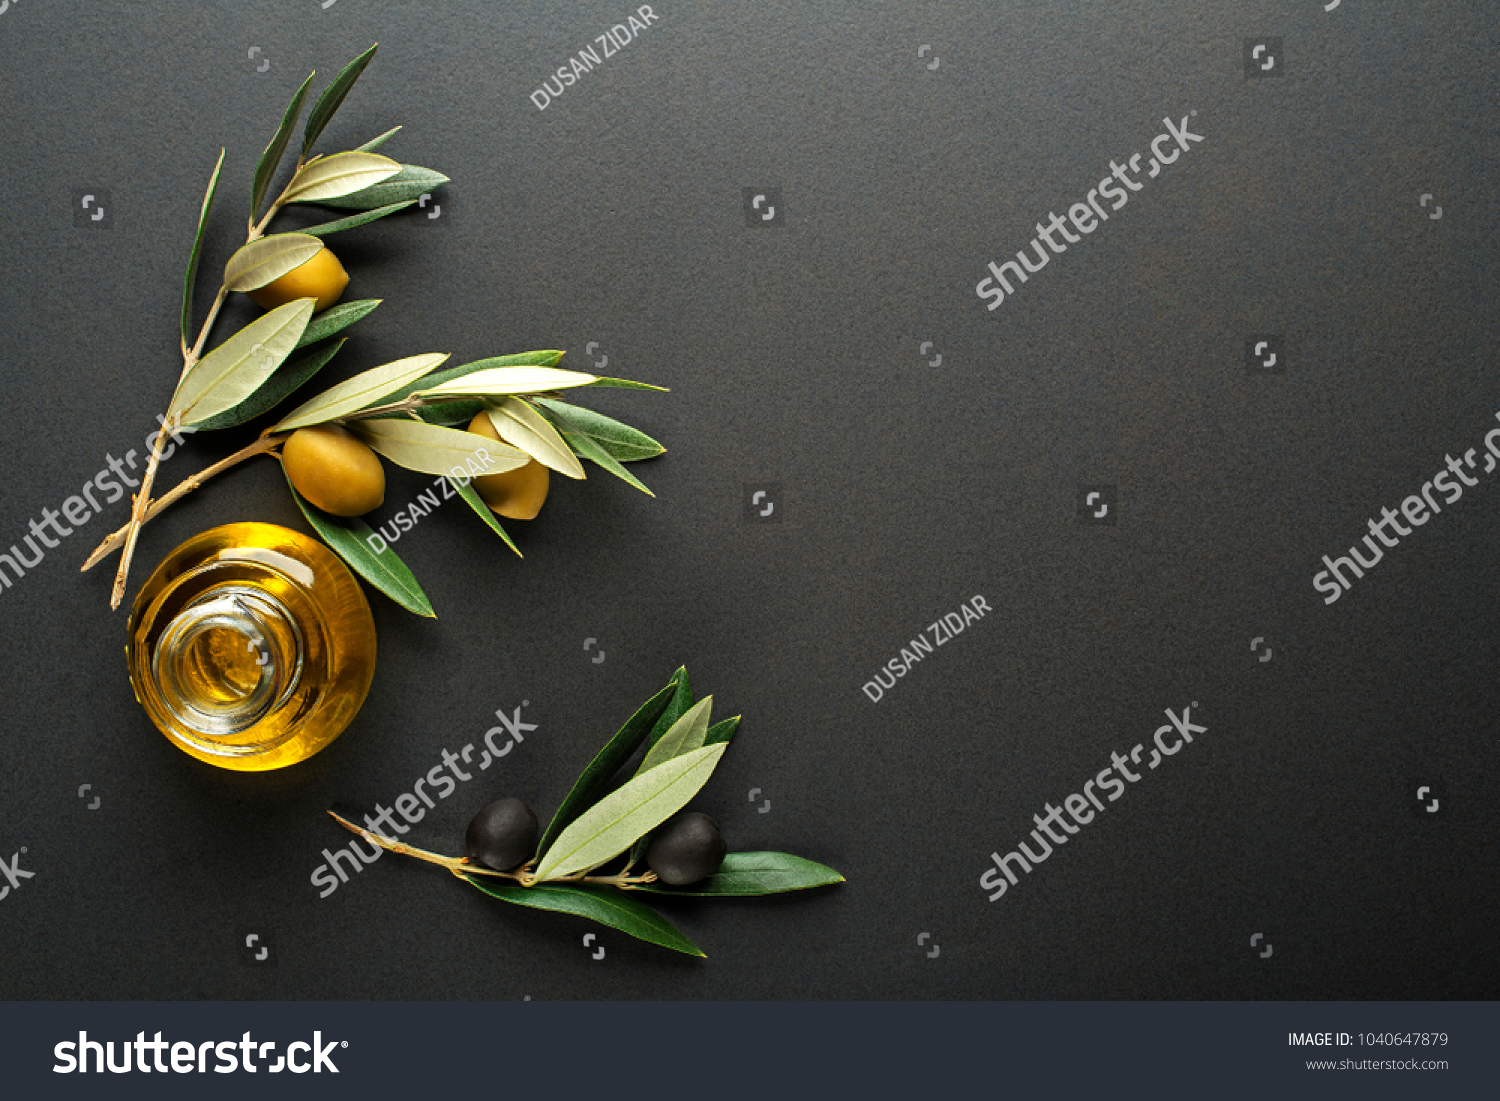 Olive oil and olive branch on black background #1040647879